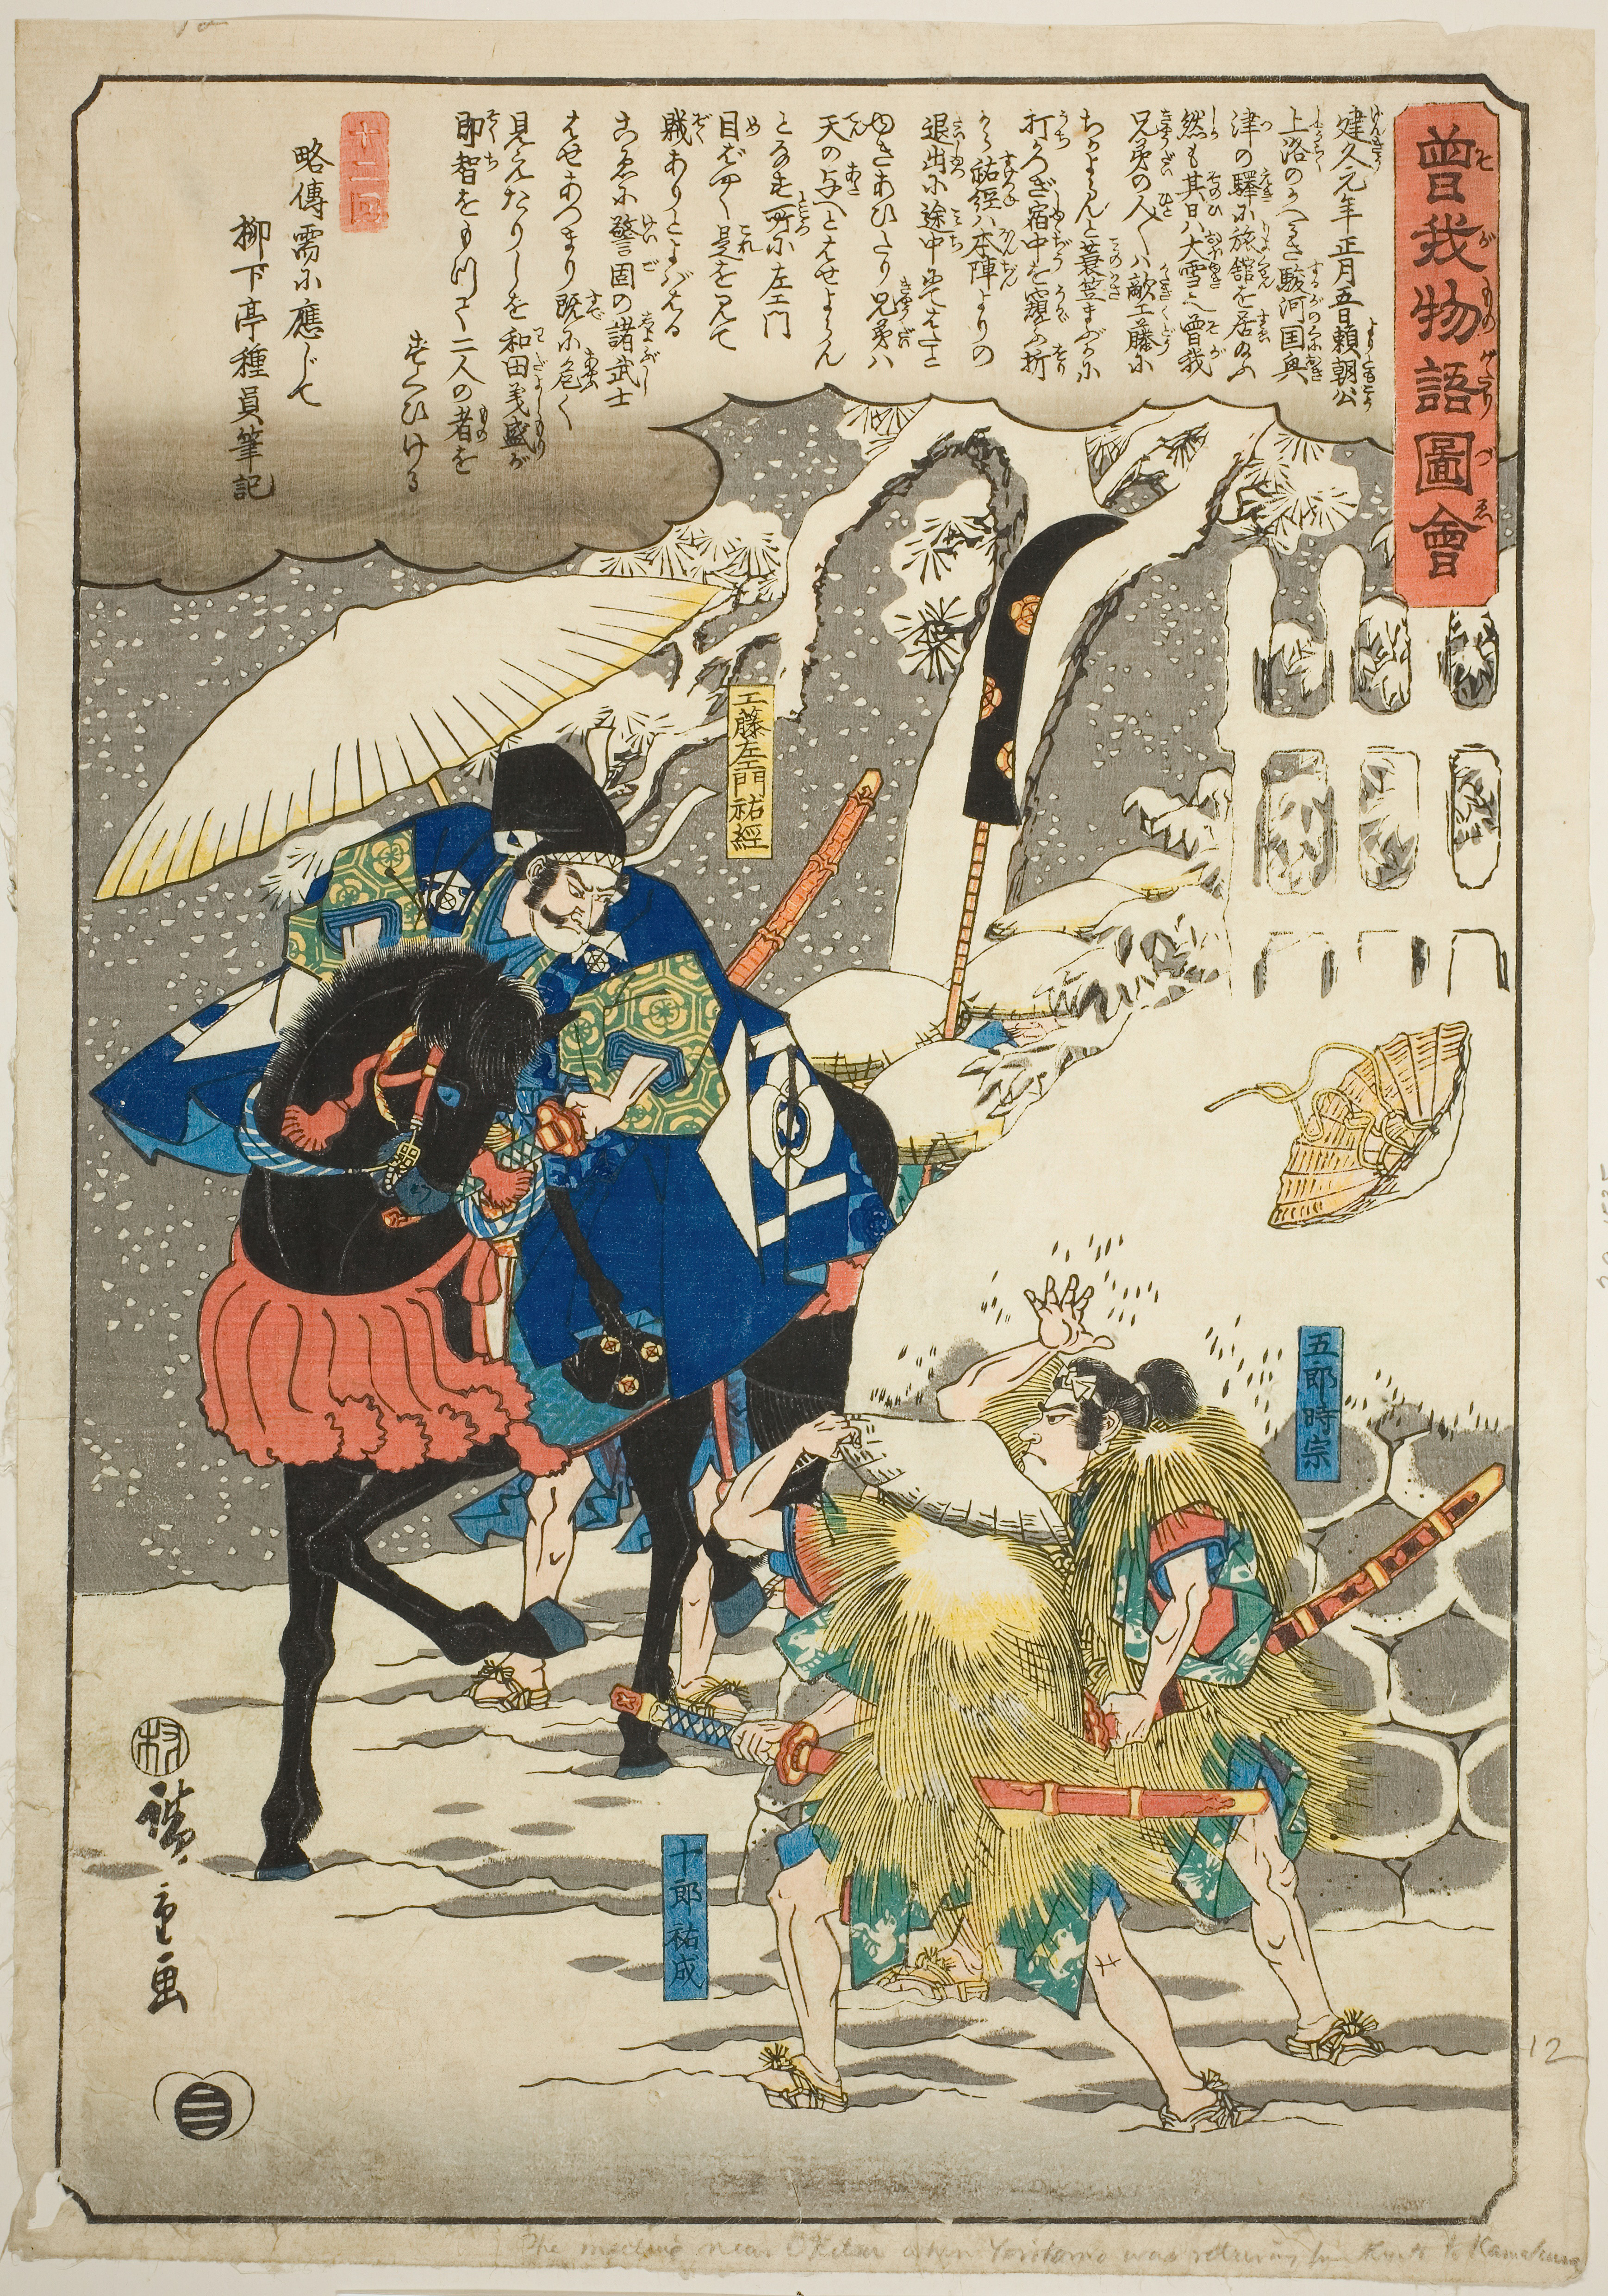 A Japanese Samurai rendering